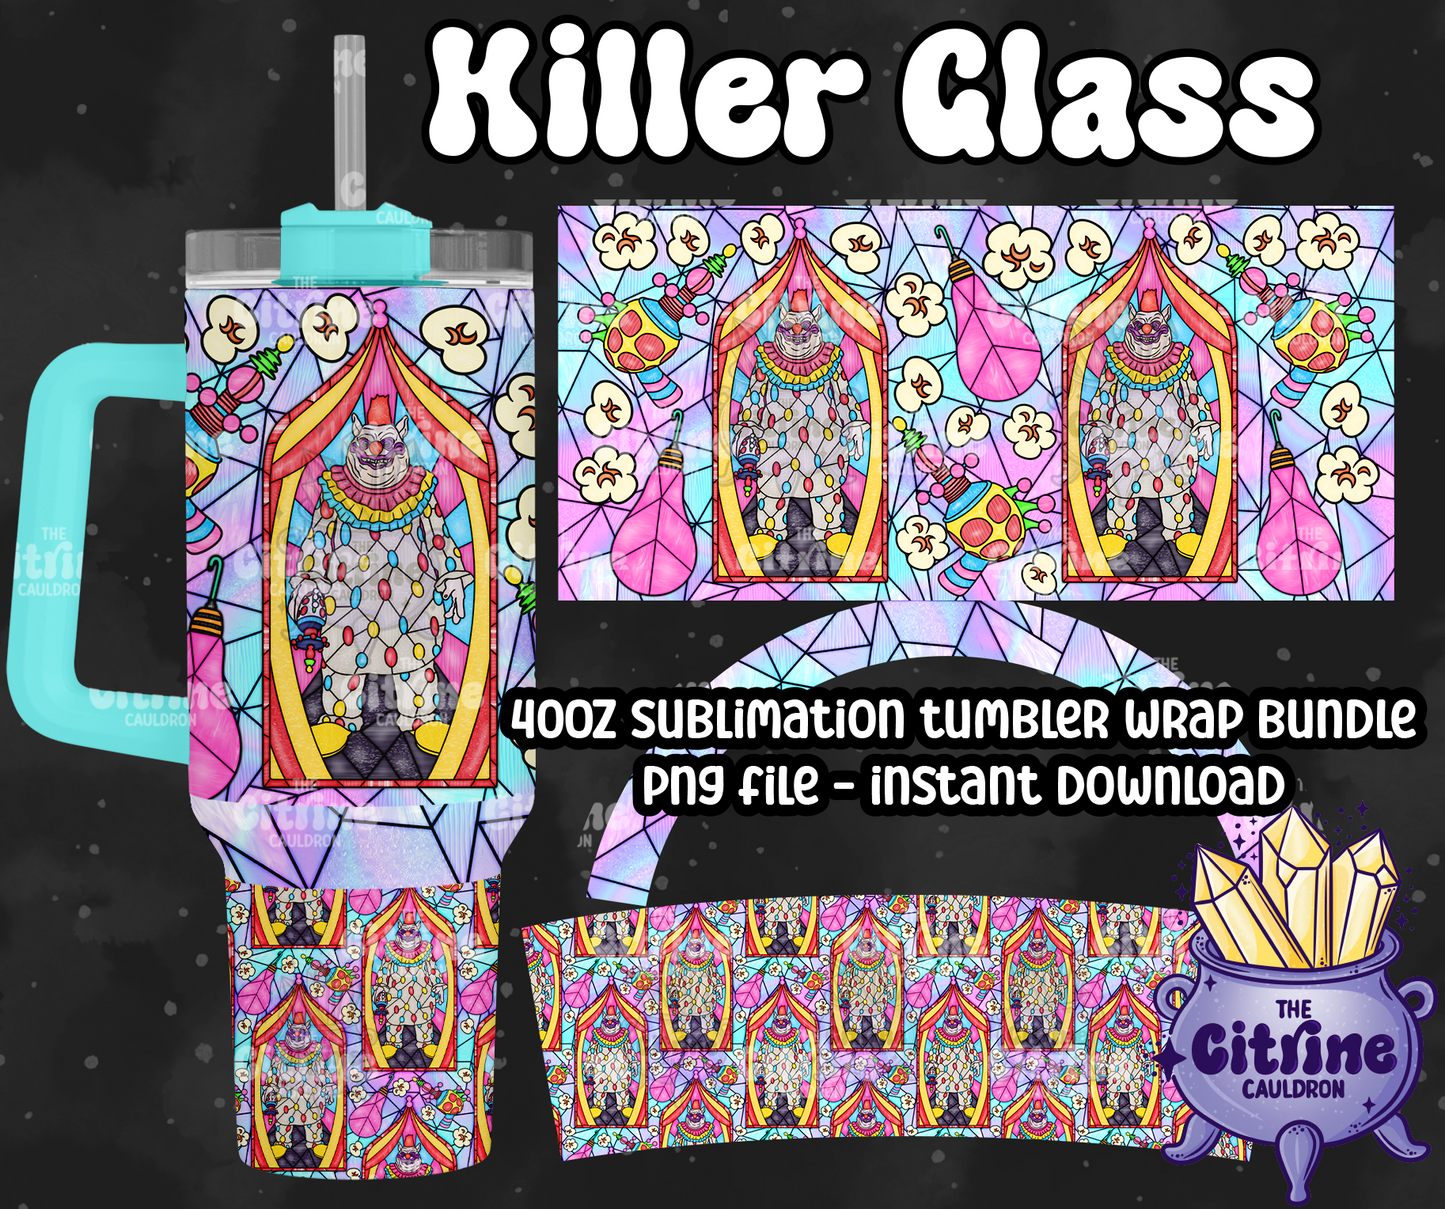 Killer Glass - PNG Wrap for Sublimation 40oz Tumbler